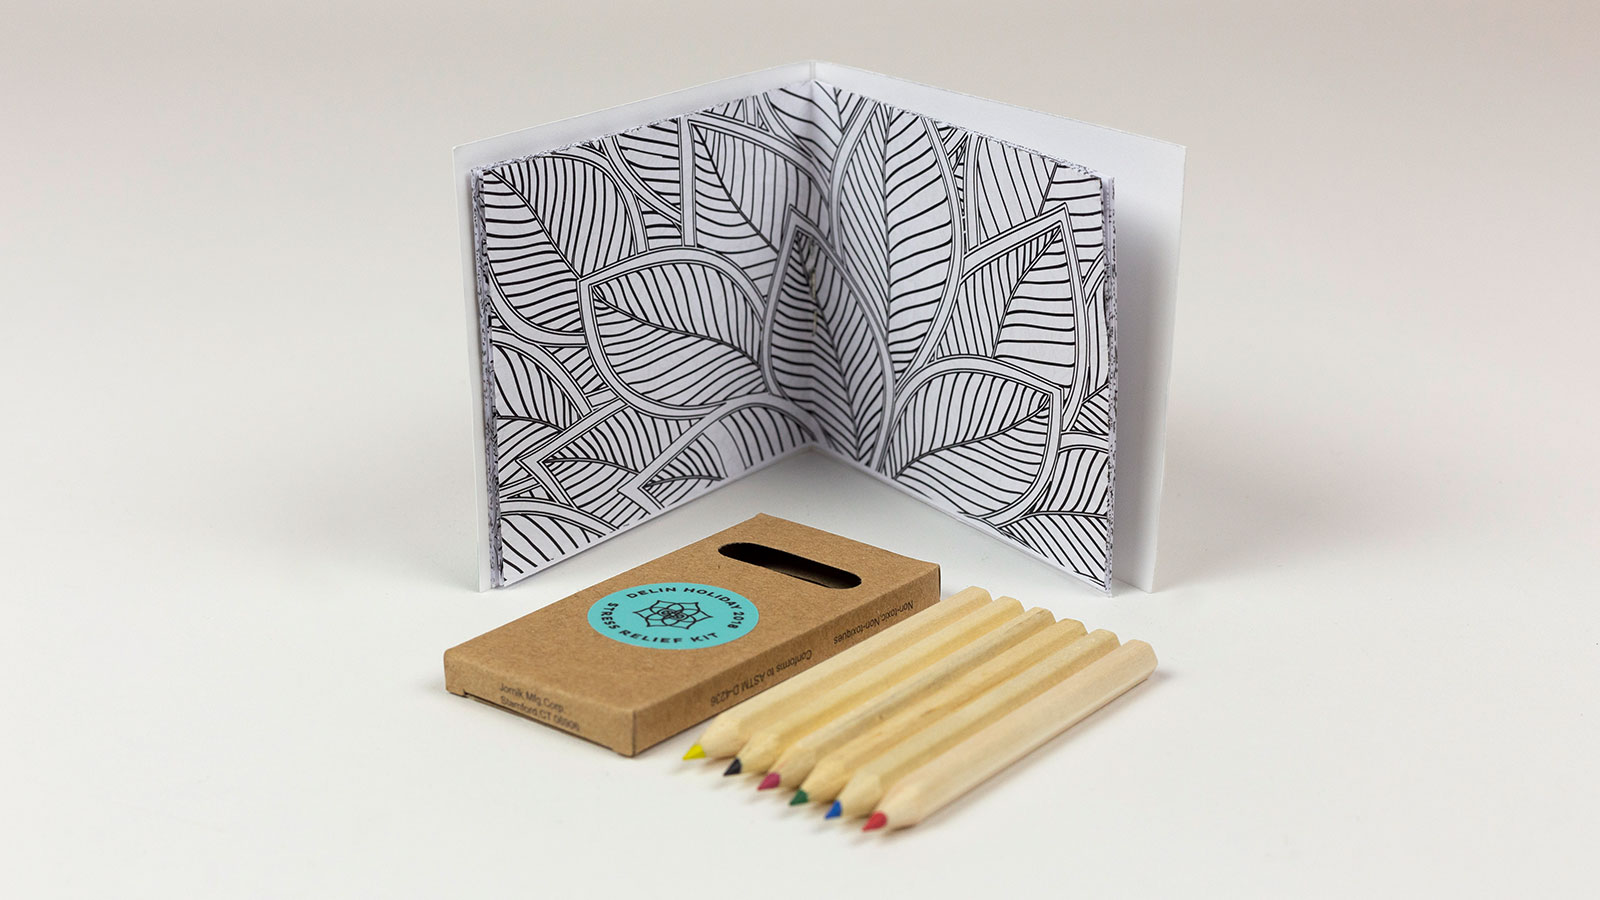 Delin Design Holiday 2018 Stress Kit Direct-Mail Promotion: "Color Me Concerned" Coloring Book + Pencil Set Interior